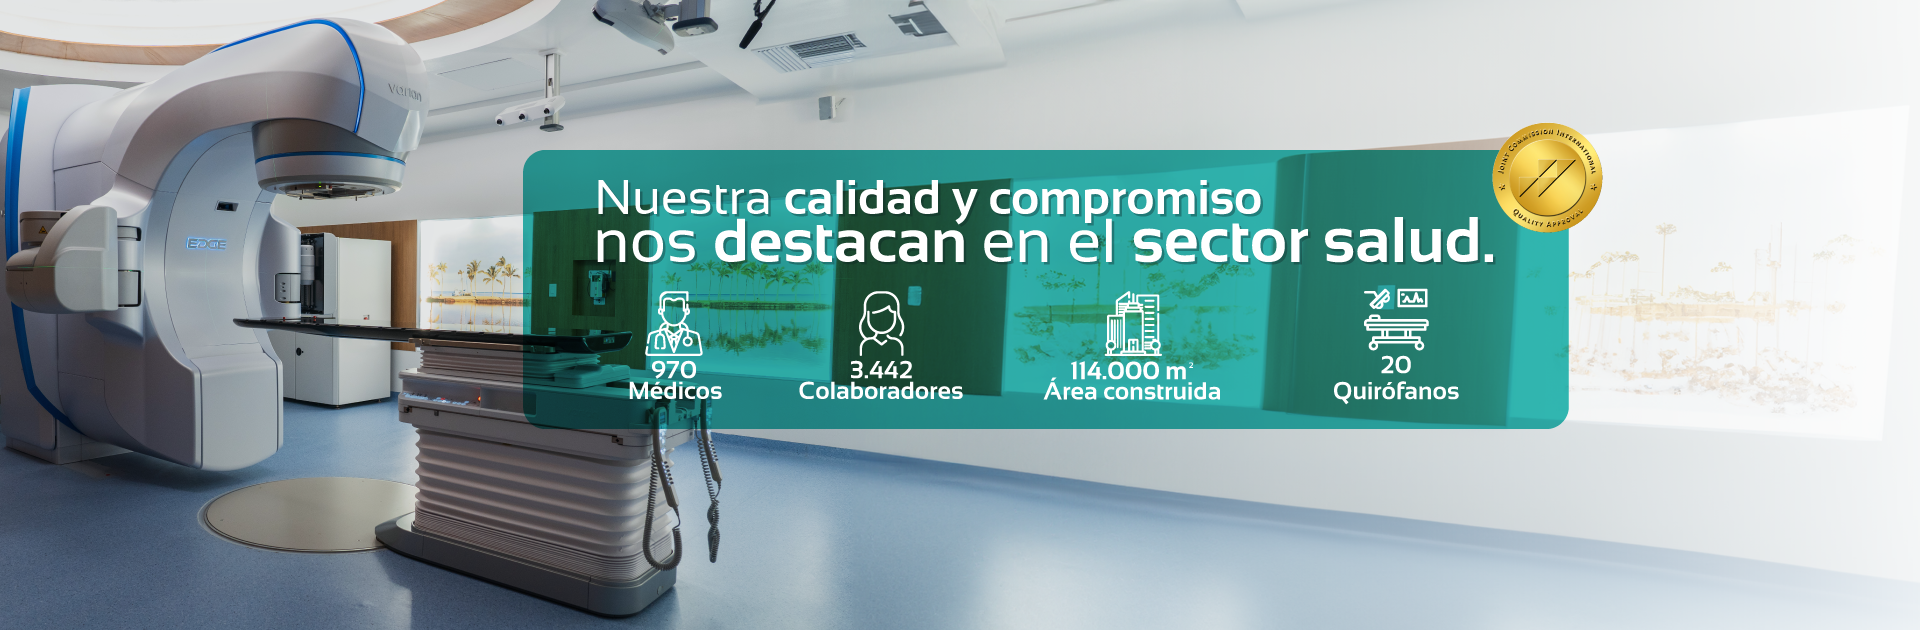 banner-calidad-compromiso-sector-salud-clinica-imbanaco